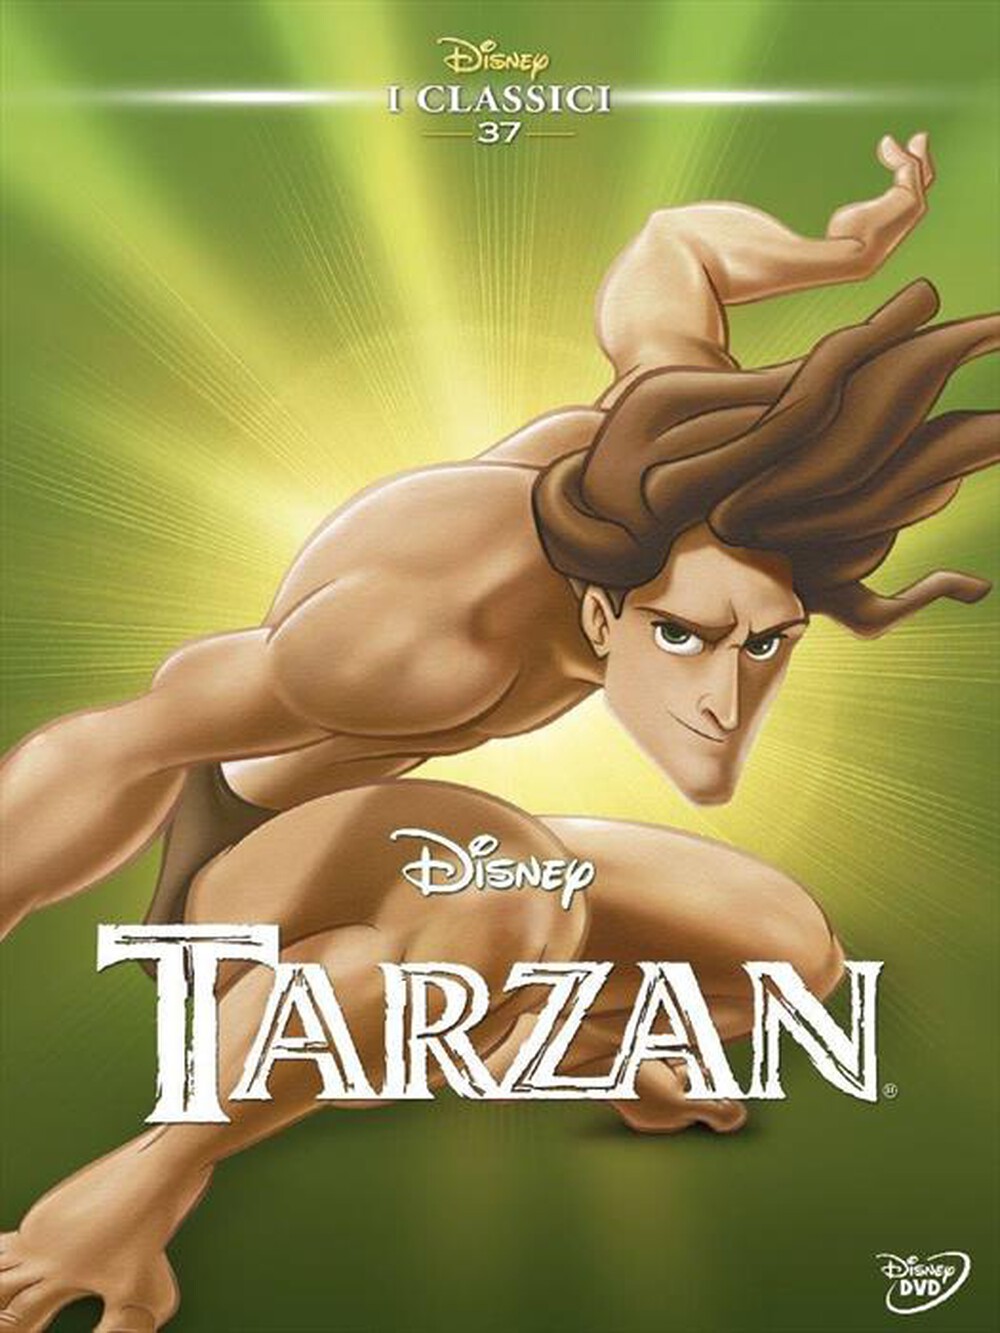 "WALT DISNEY - Tarzan"